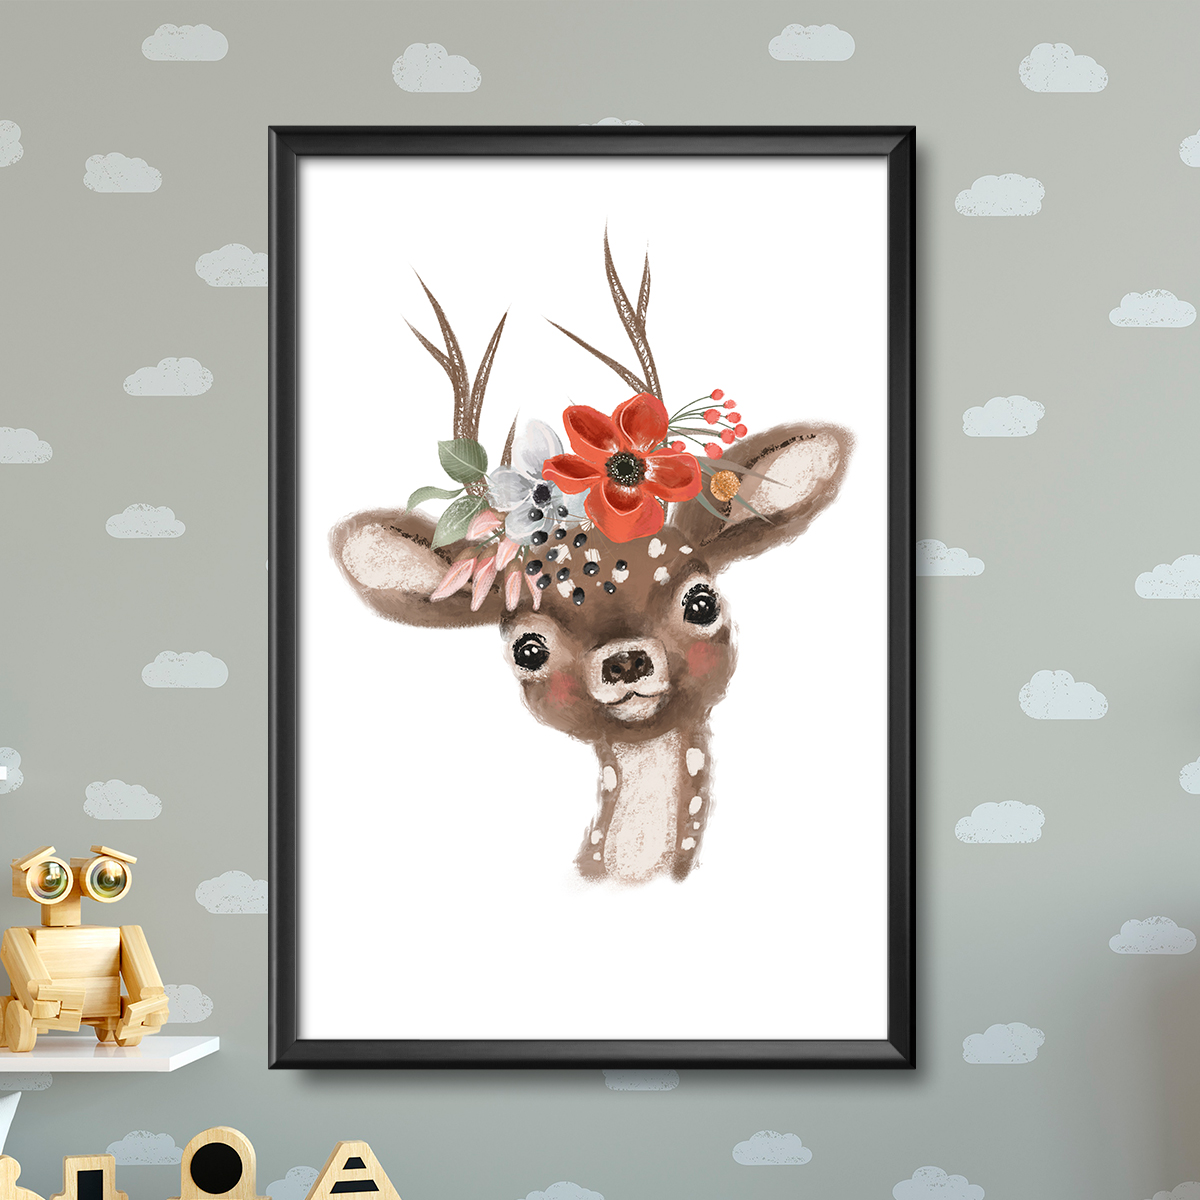 Постер "Baby deer" от Интернет магазина Милота